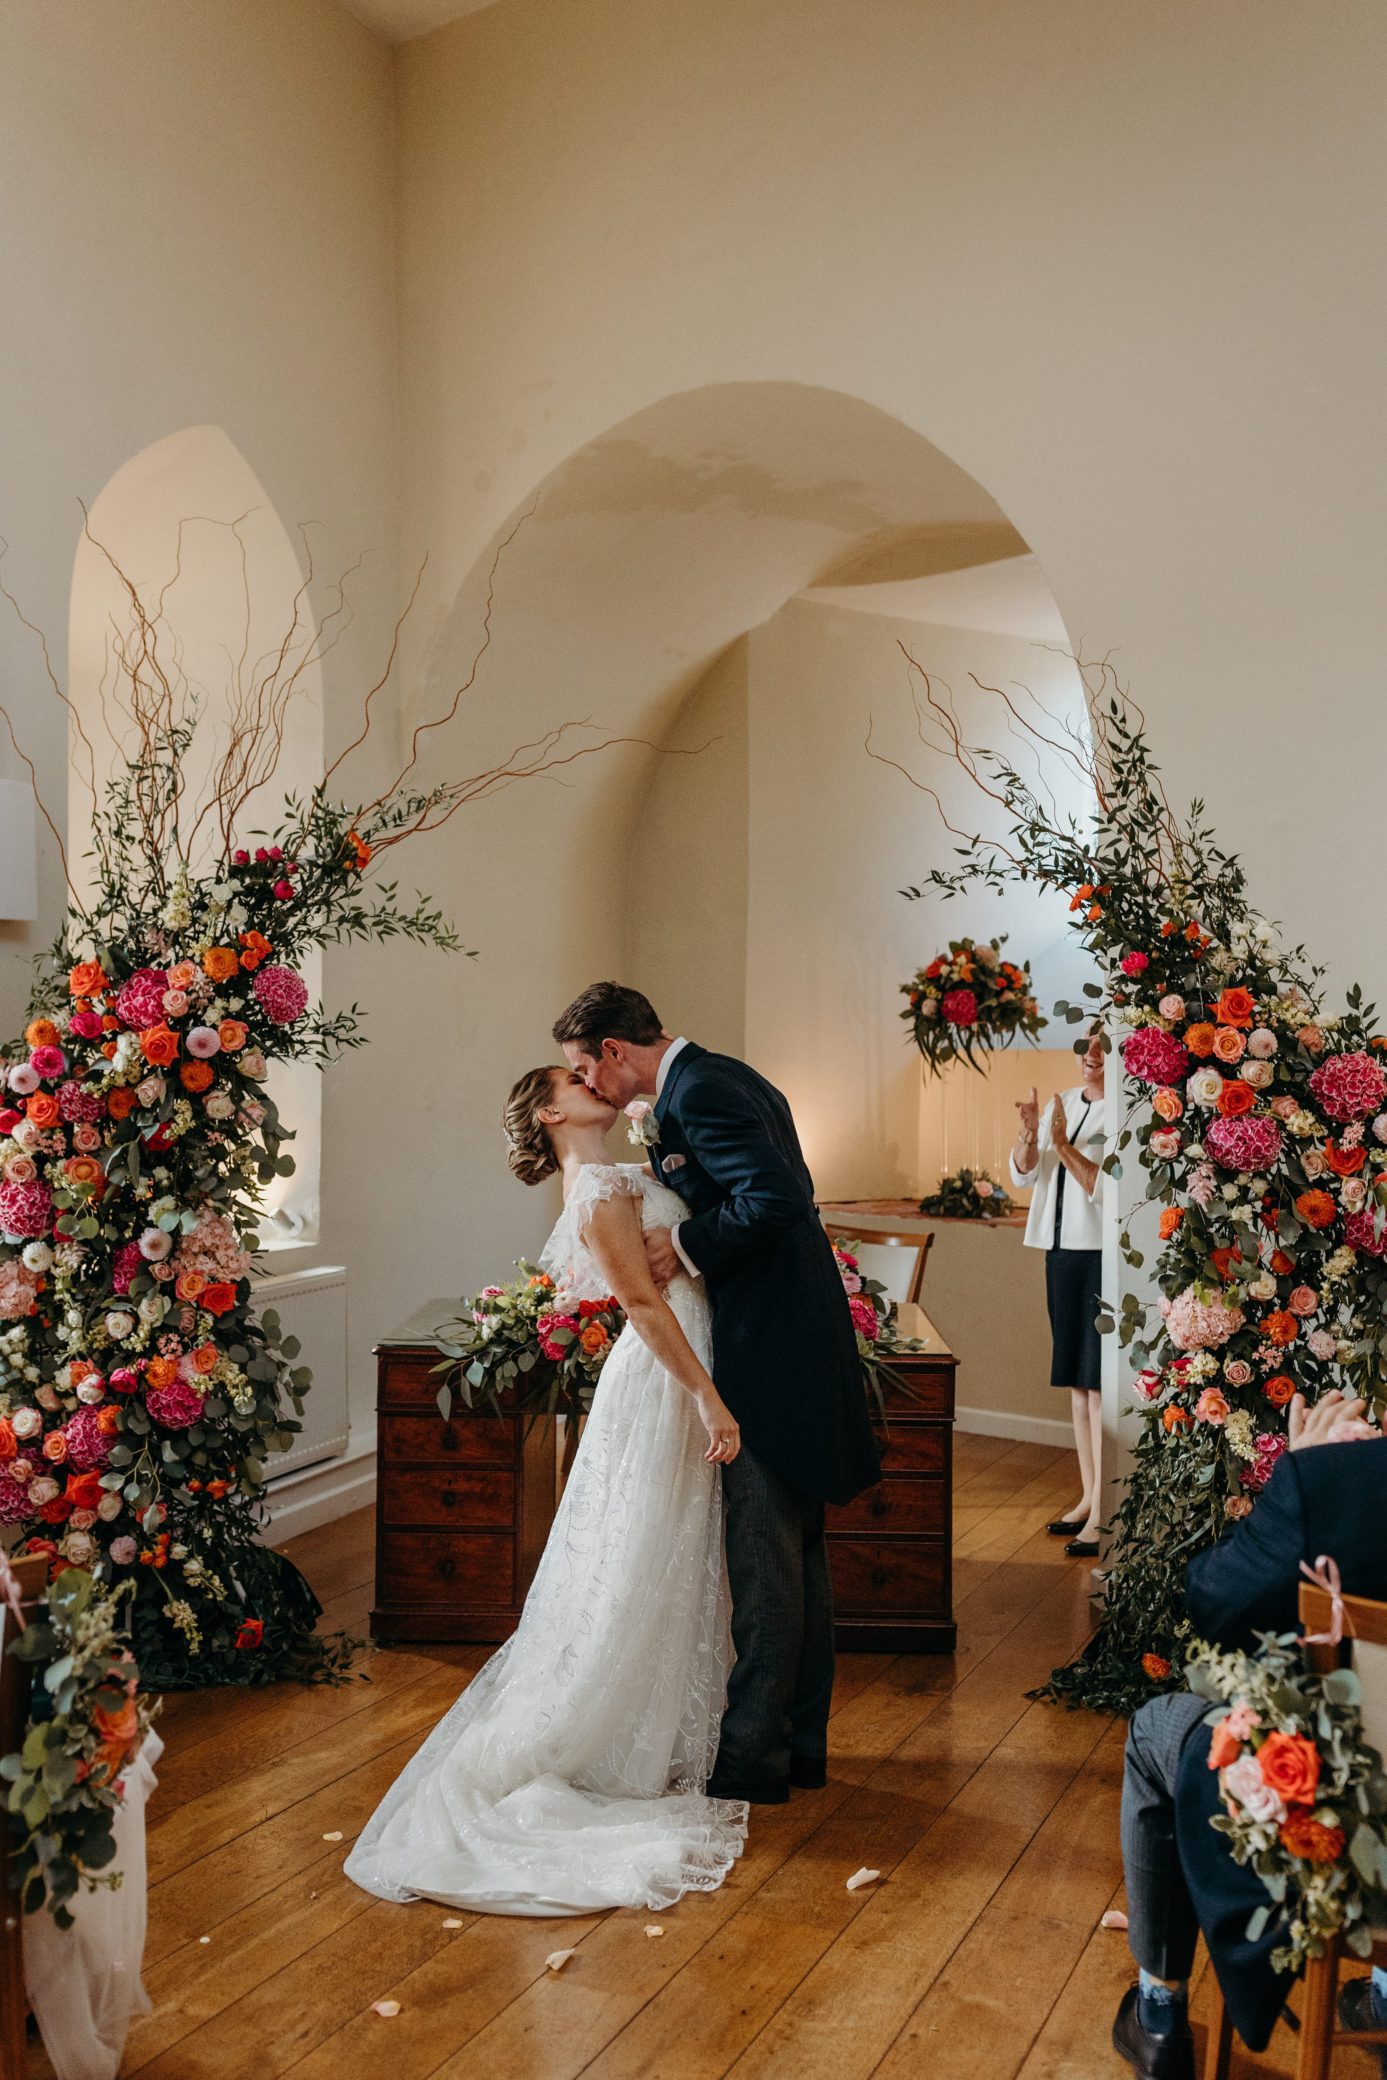 Wedding flower inspo at Farnham Castle in Surrey